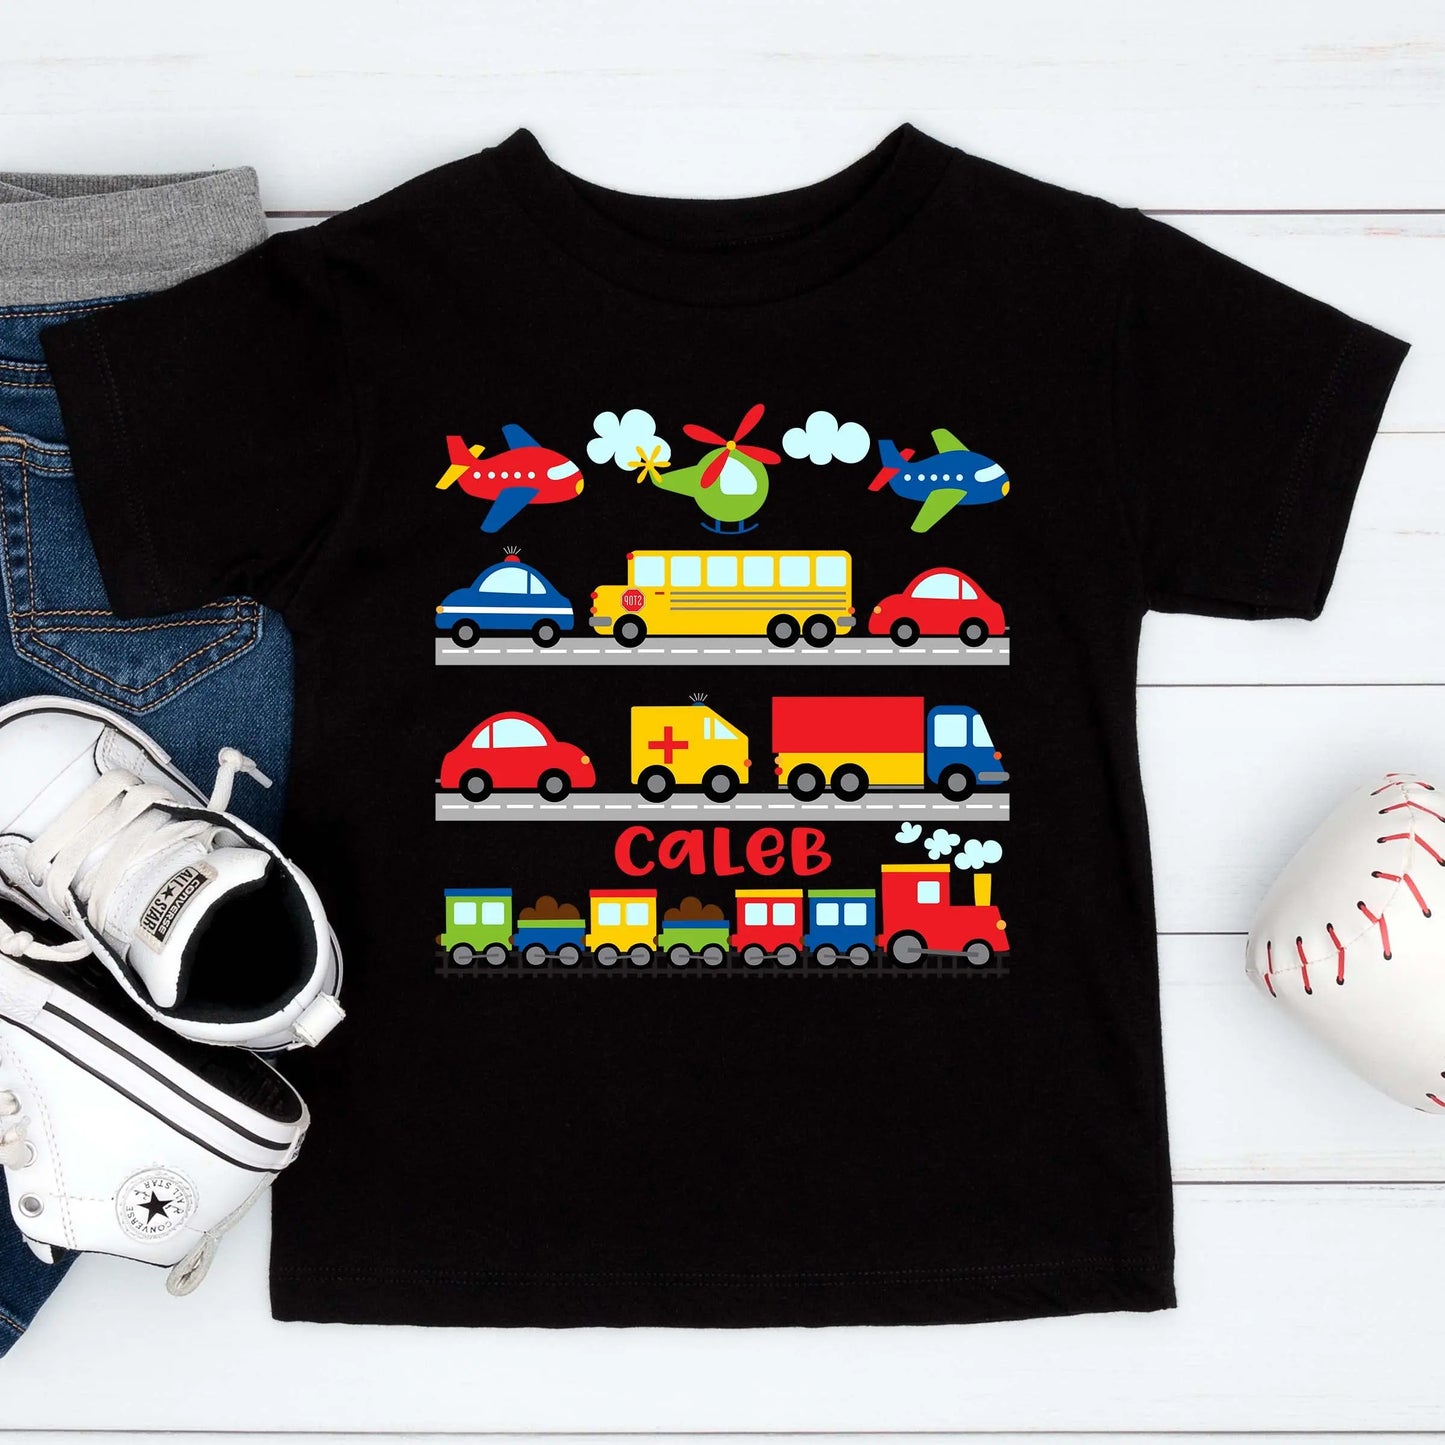 Transportation Personalized Baby Shirt Amazing Faith Designs